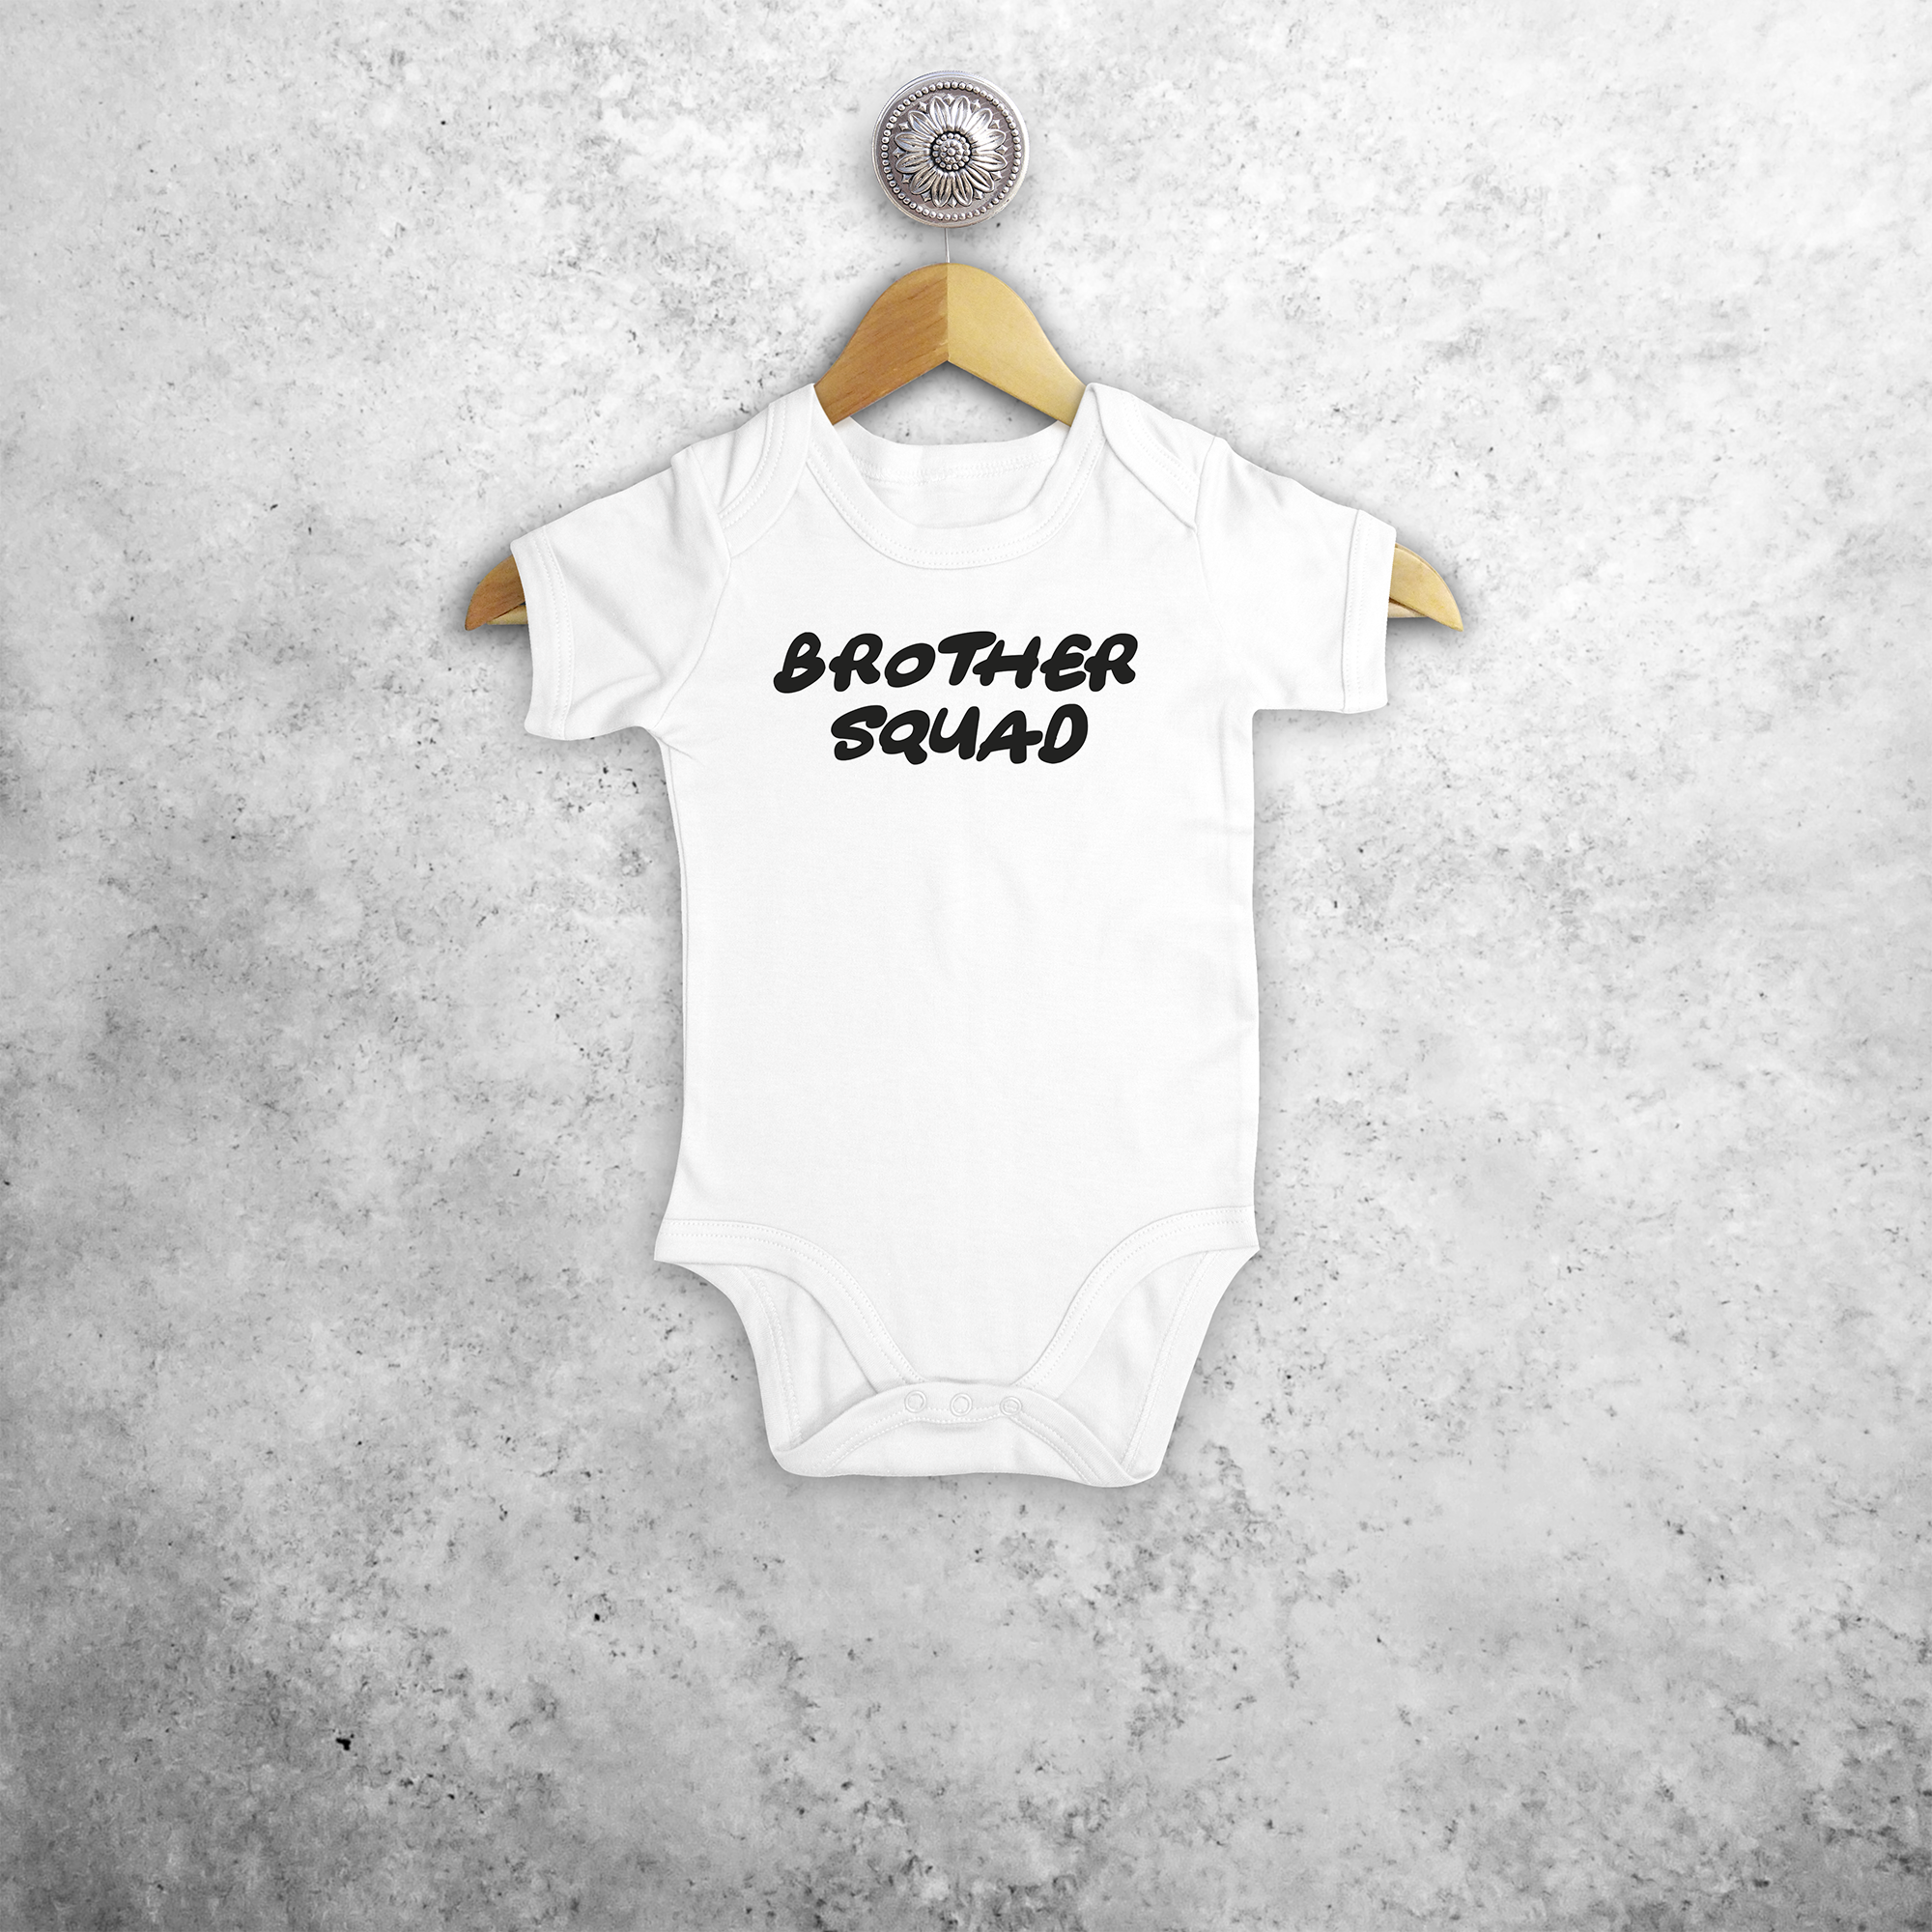 'Brother squad' baby shortsleeve bodysuit